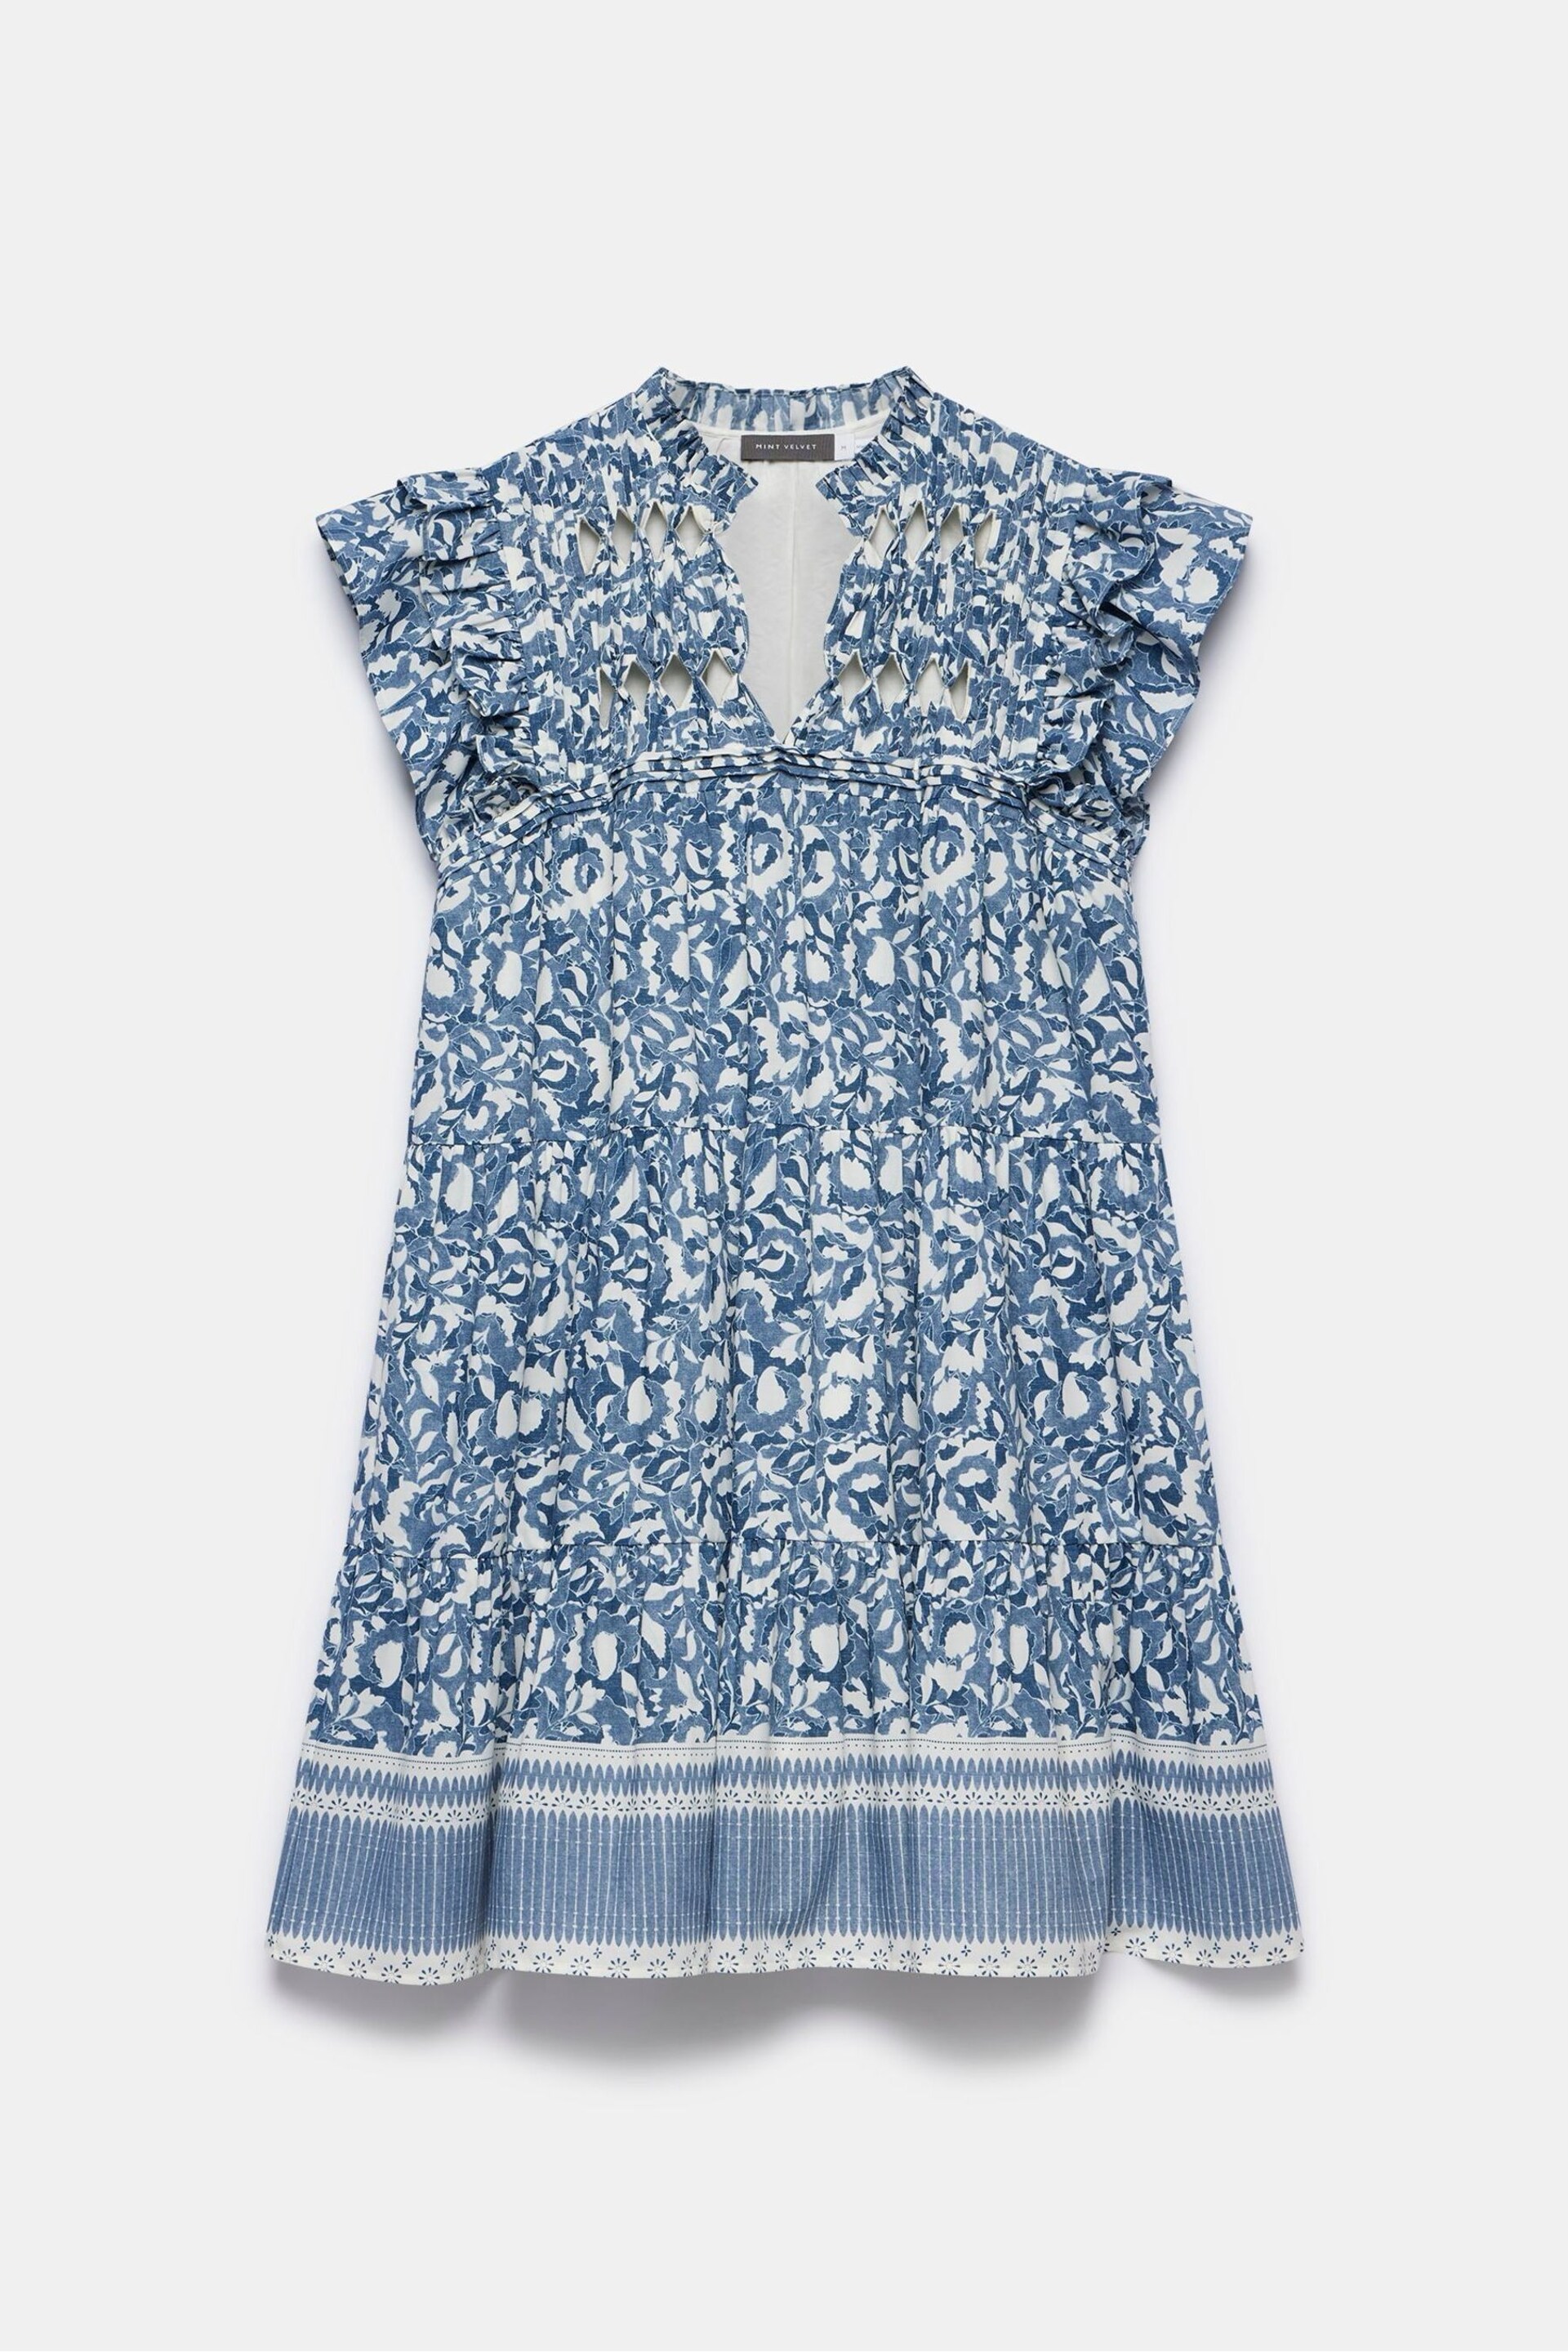 Mint Velvet Blue Print Mini Dress - Image 3 of 4